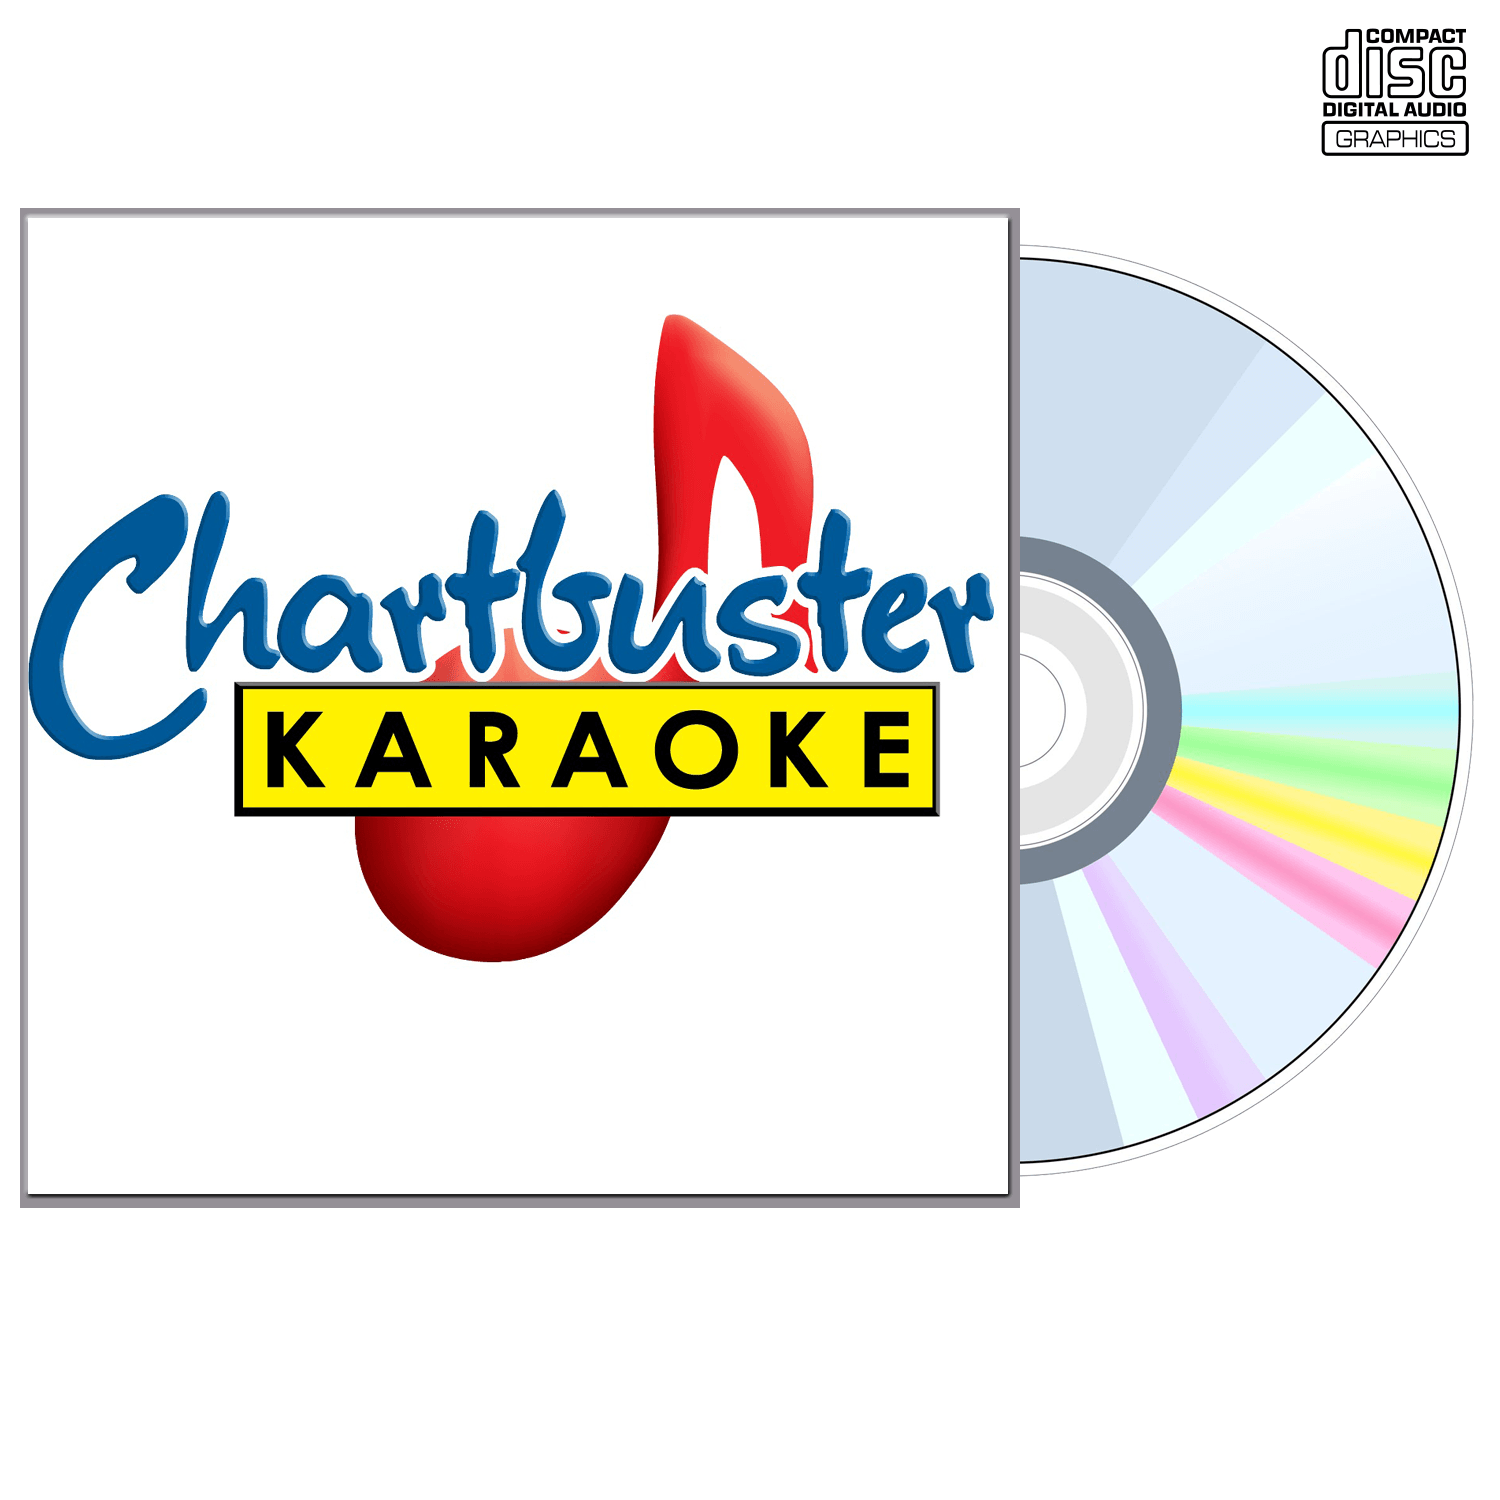 Toby Keith Vol 4 - CD+G - Chartbuster Karaoke - Karaoke Home Entertainment